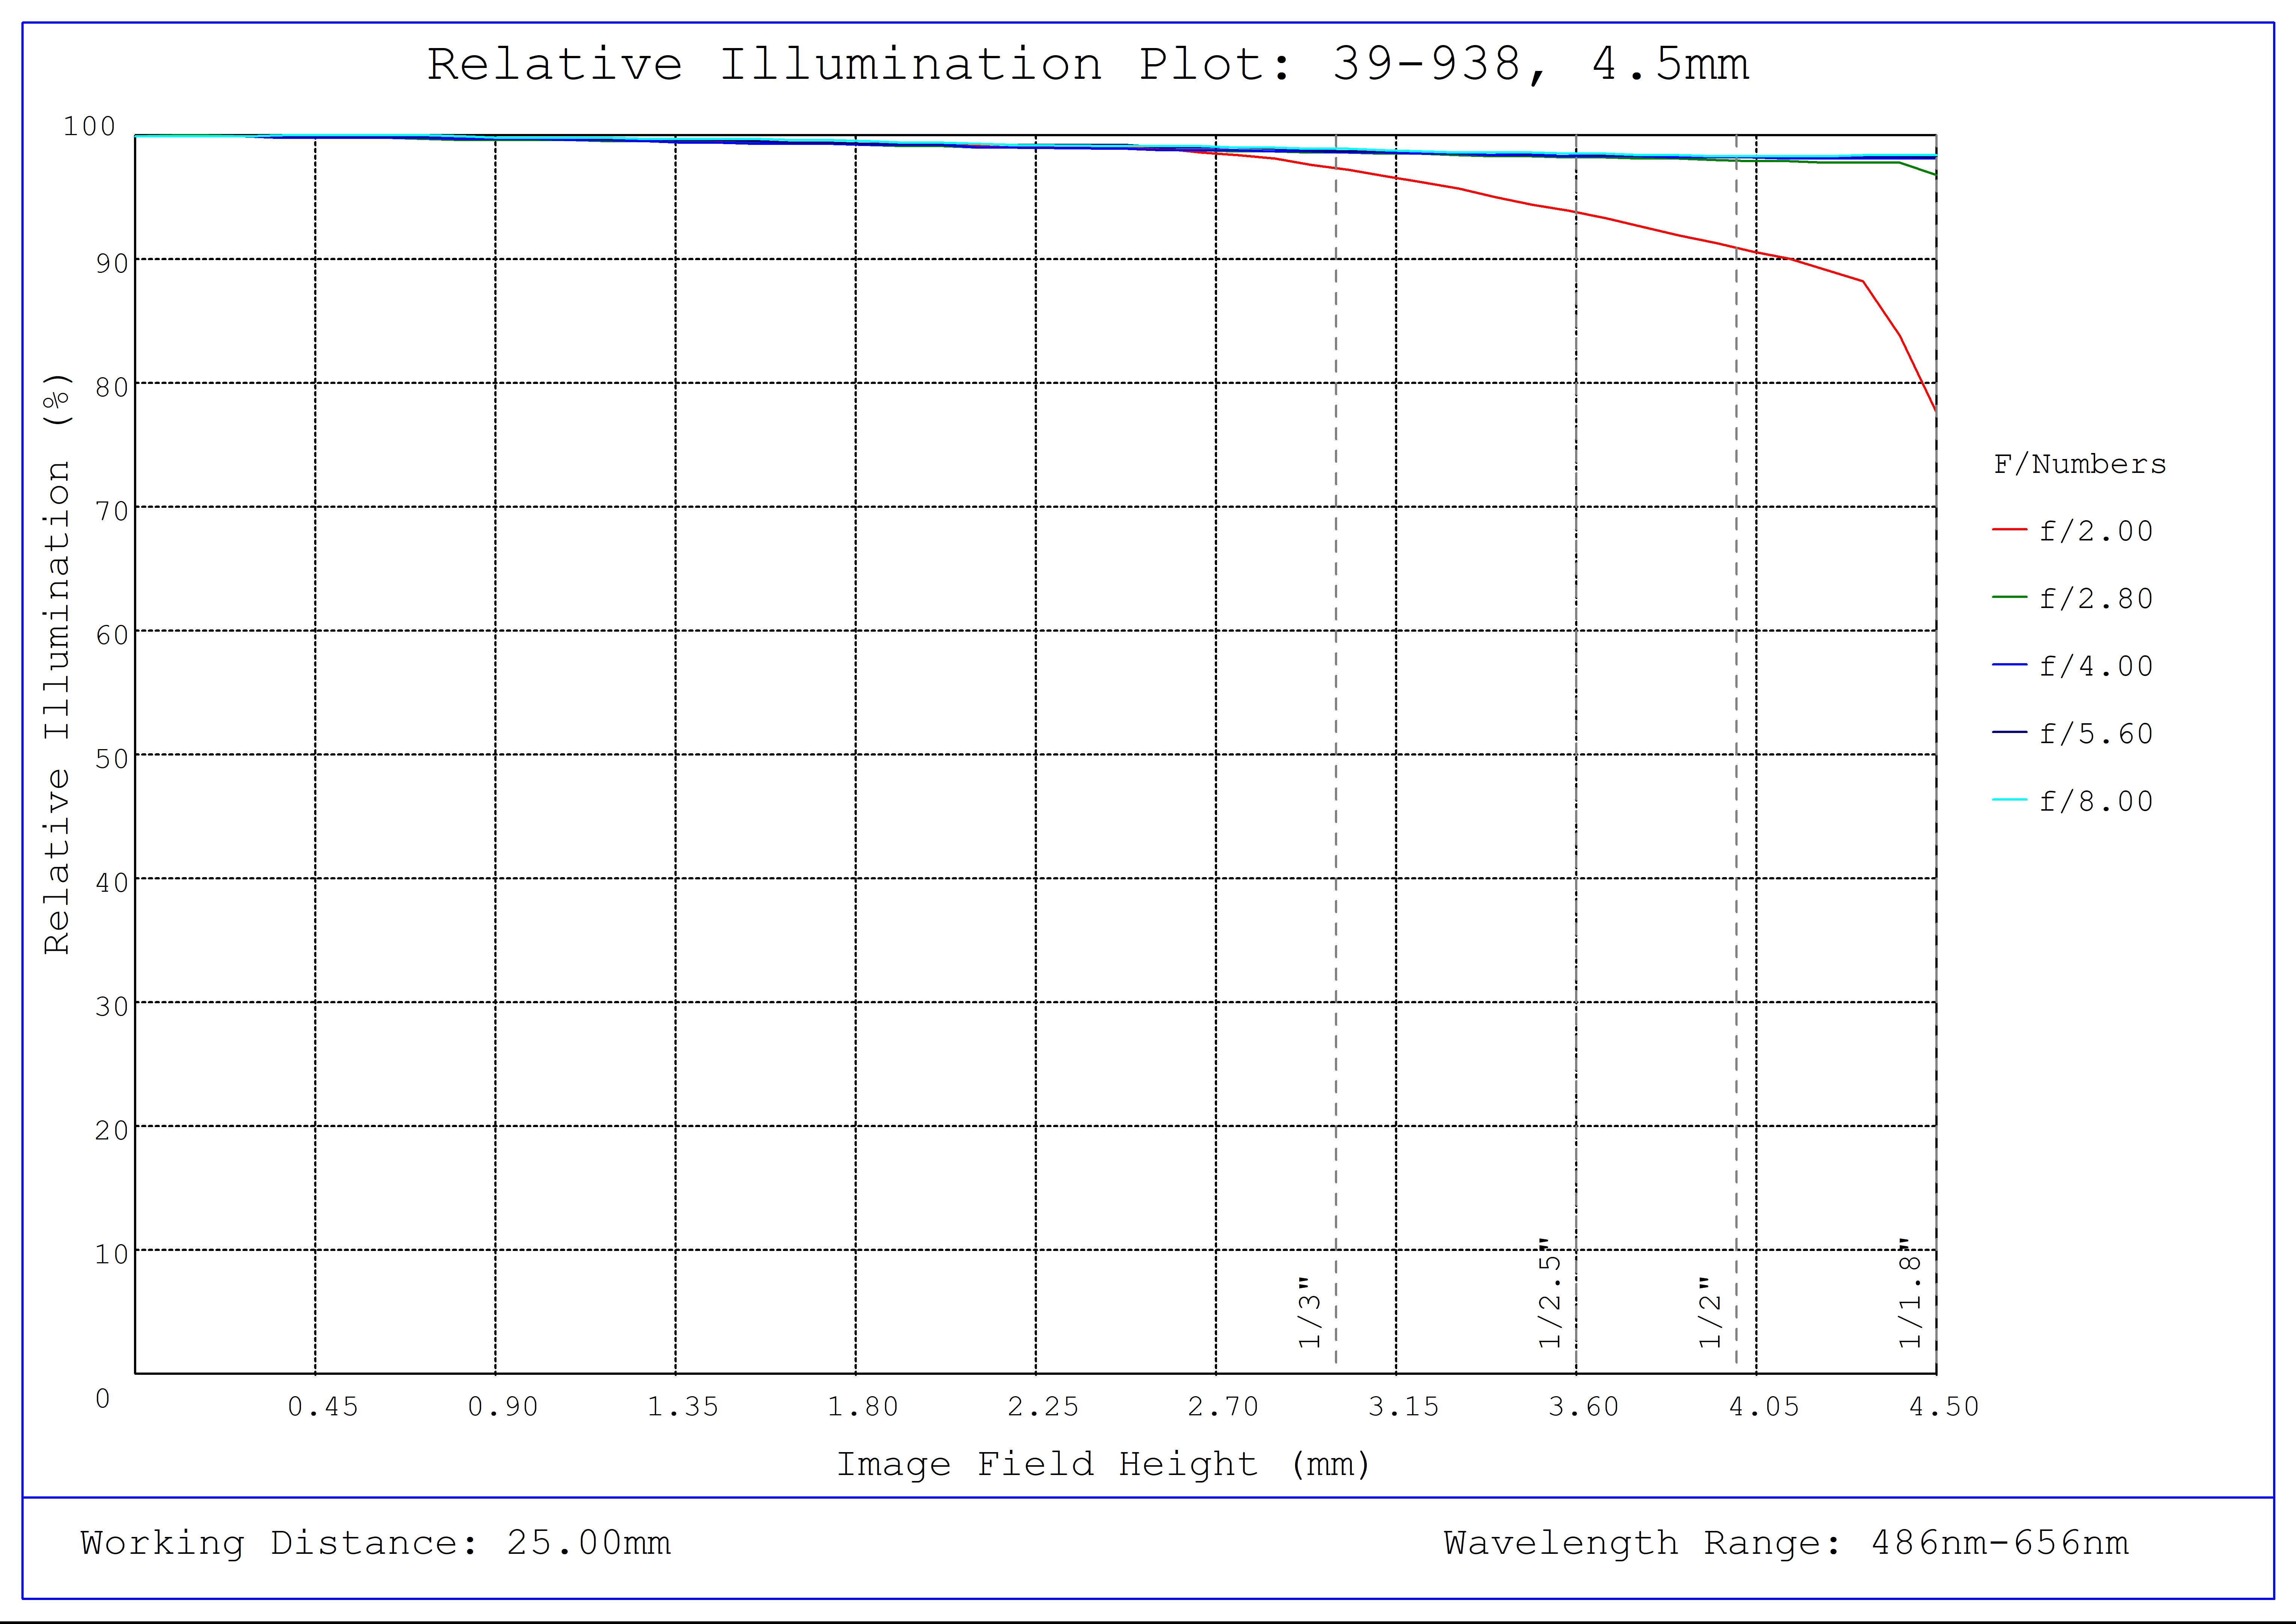 #39-938, 4.5mm C VIS-NIR Series Fixed Focal Length Lens, Relative Illumination Plot